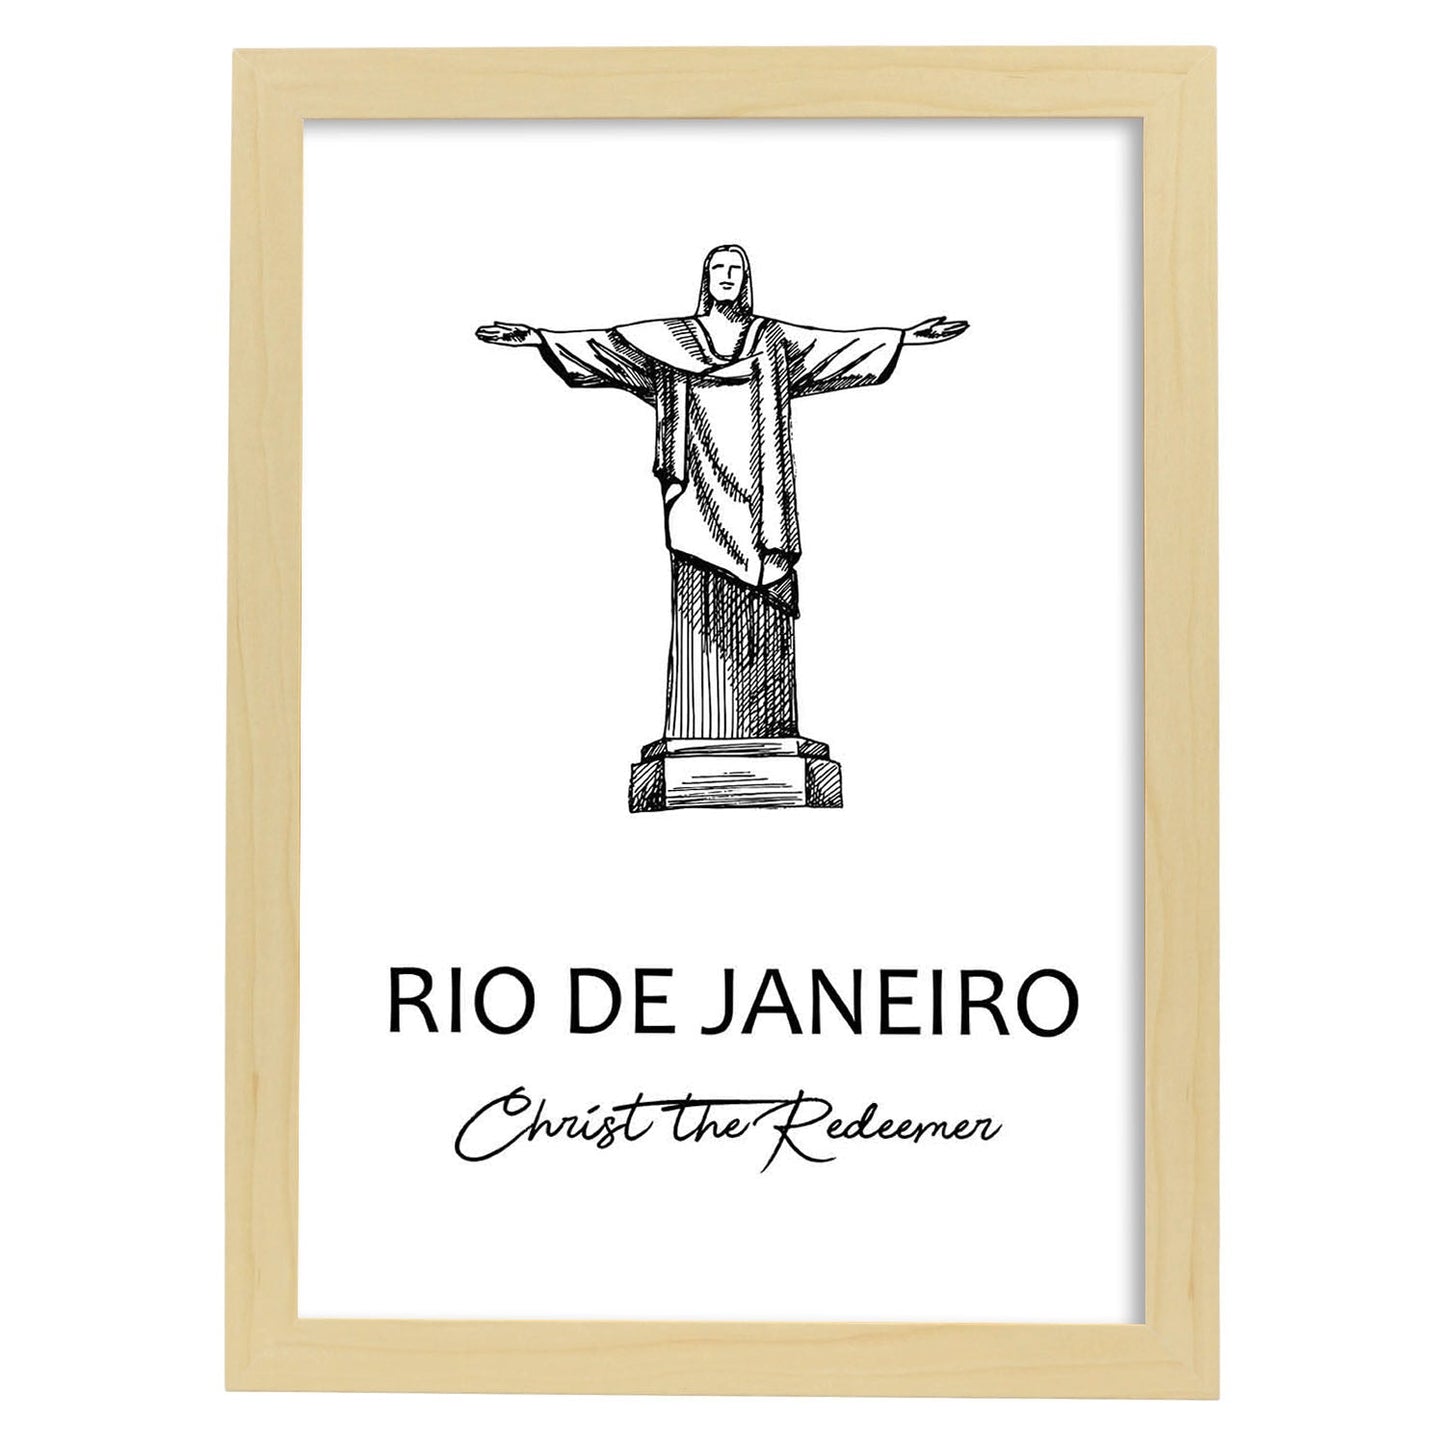 Poster de Rio de Janeiro - Cristo redentor. Láminas con monumentos de ciudades.-Artwork-Nacnic-A4-Marco Madera clara-Nacnic Estudio SL